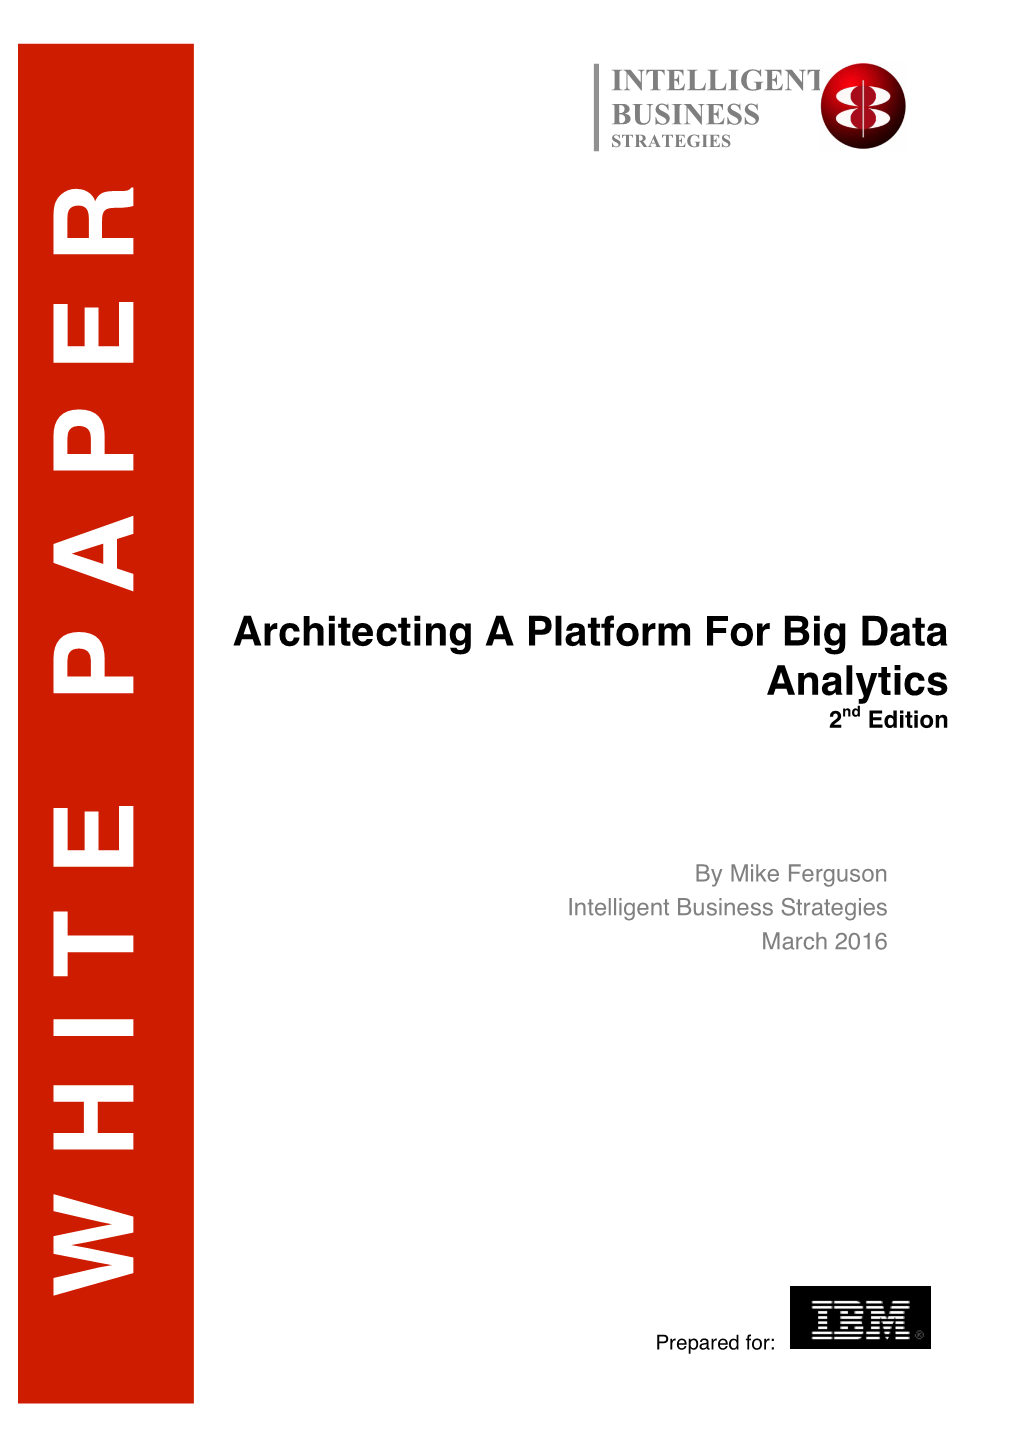 Architecting a Platform for Big Data Analytics White Paper 2Nd Edition